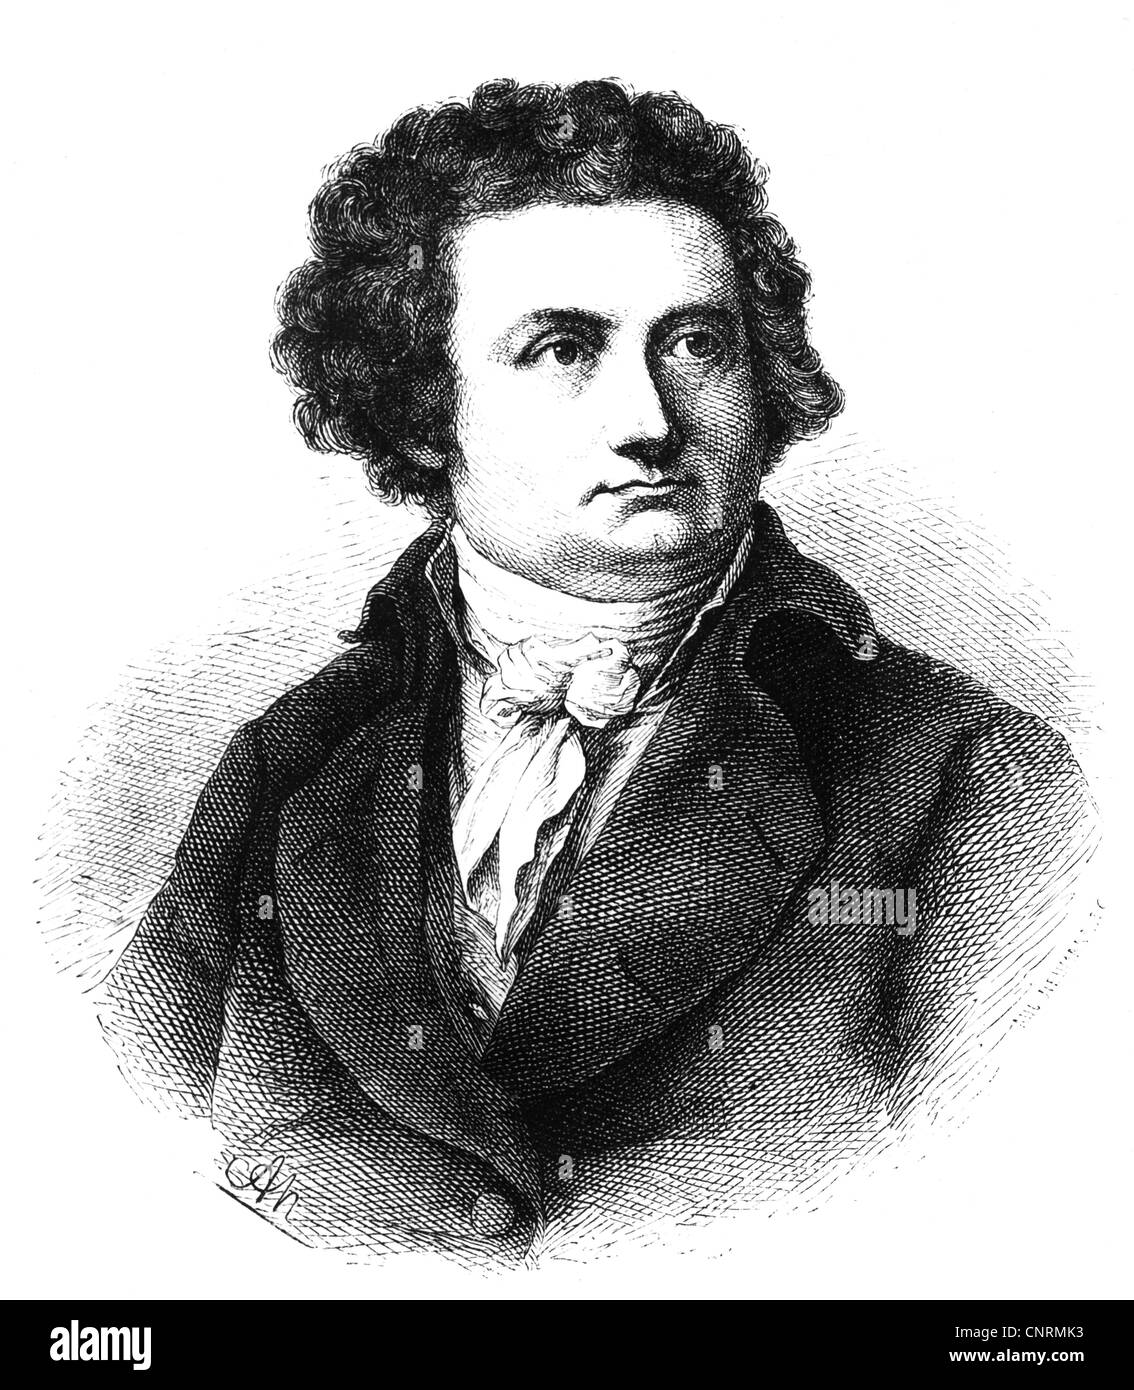 Iffland, August Wilhelm, 19.4.1759 - 22.9.1814, attore tedesco, drammaturgo, regista teatrale, ritratto, incisione in legno, Foto Stock